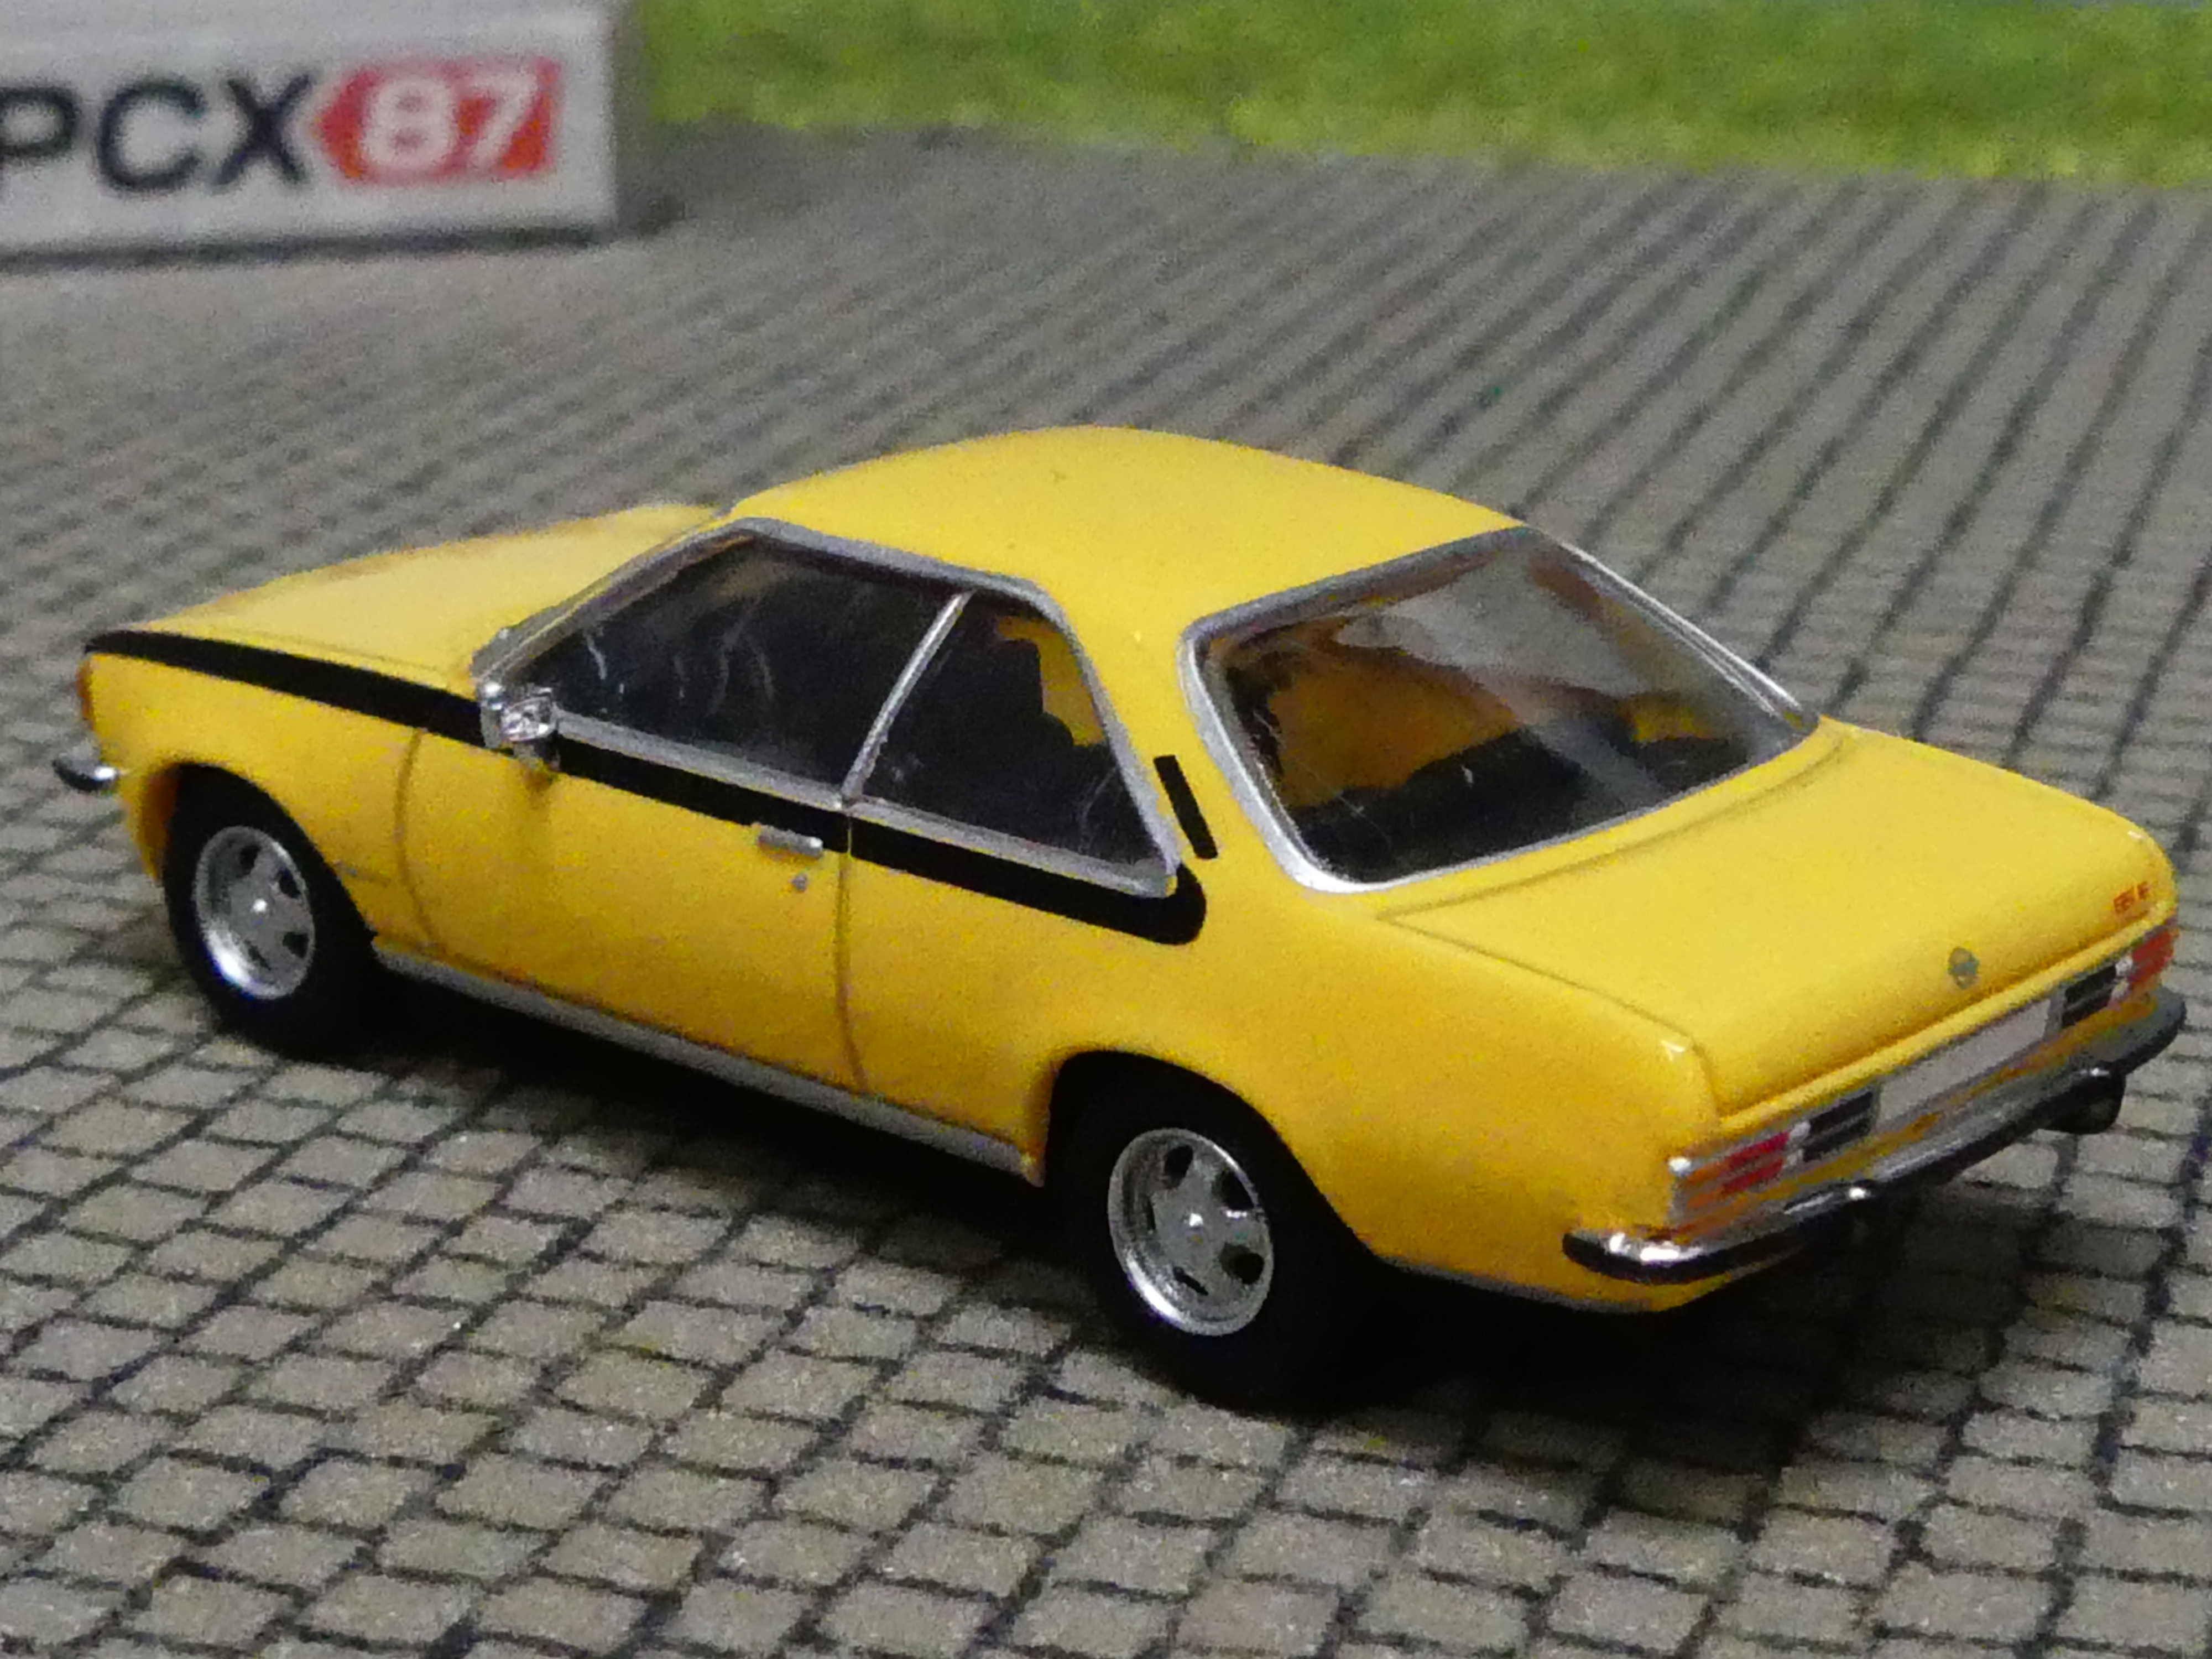 Modellspielwaren Reinhardt 1 87 Pcx Opel Commodore B Coupe Gelb